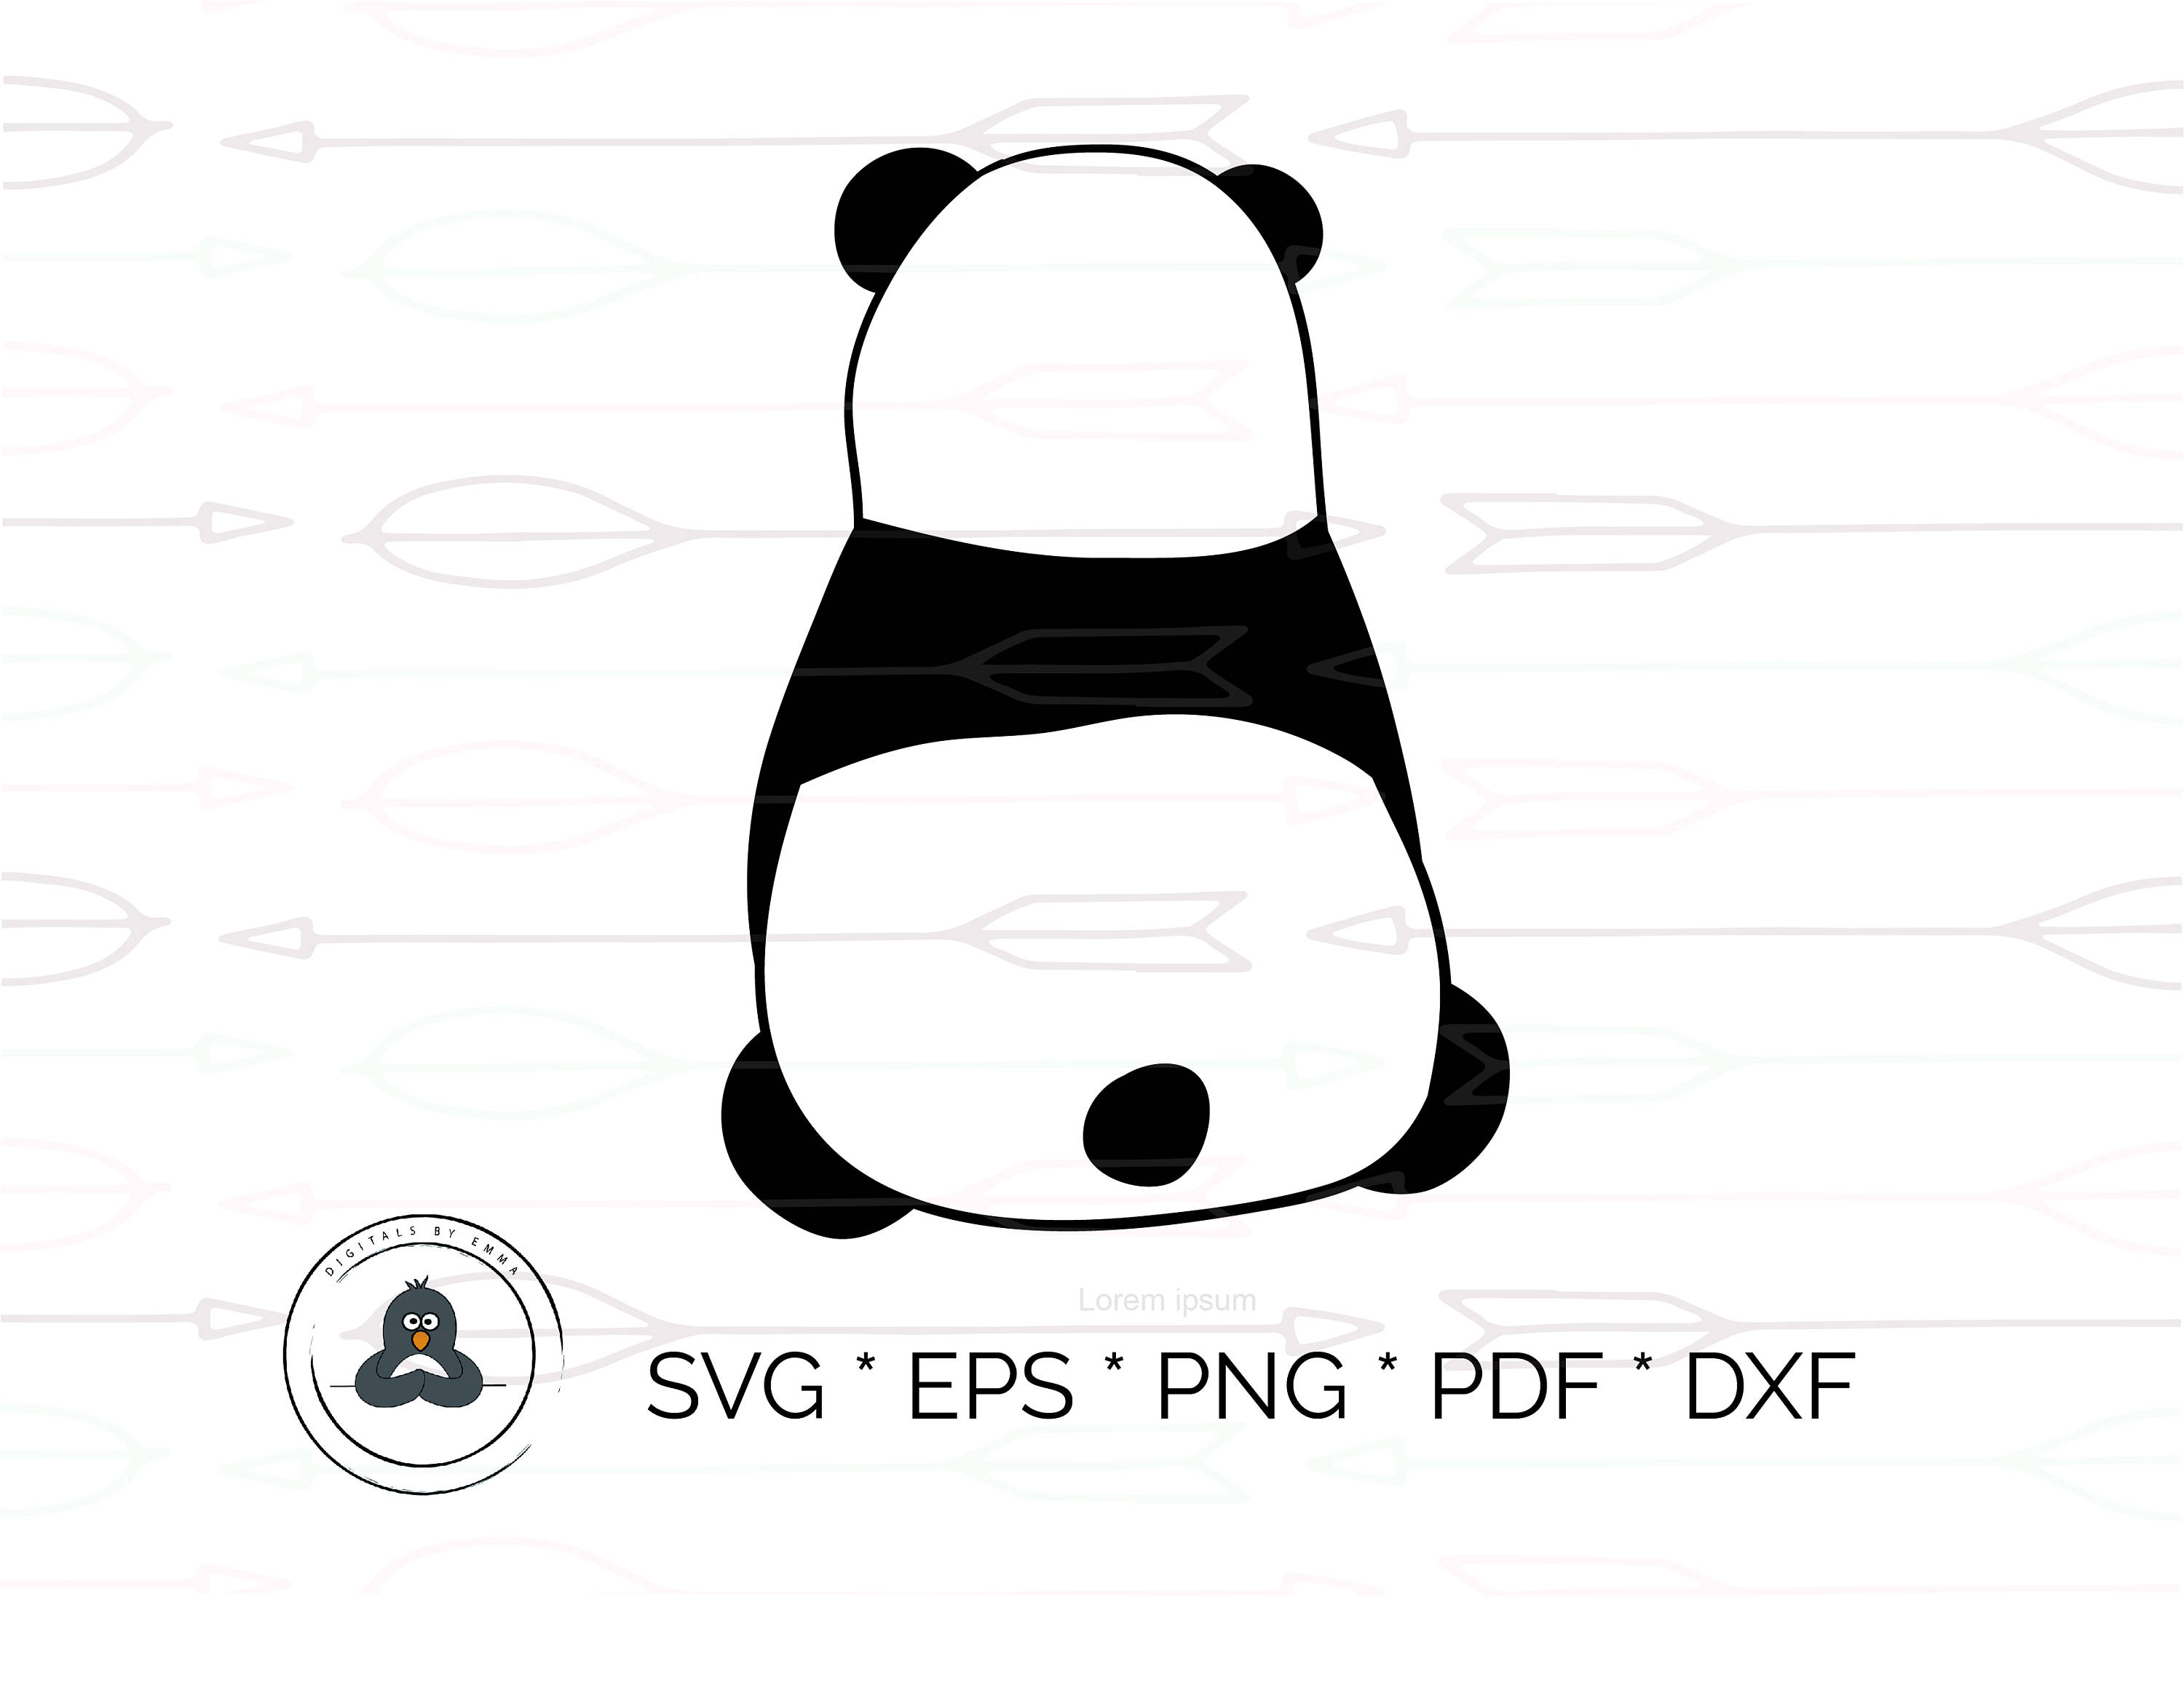 Download Panda Cute Panda Silhouette SVG & Dxf Cutting Files for